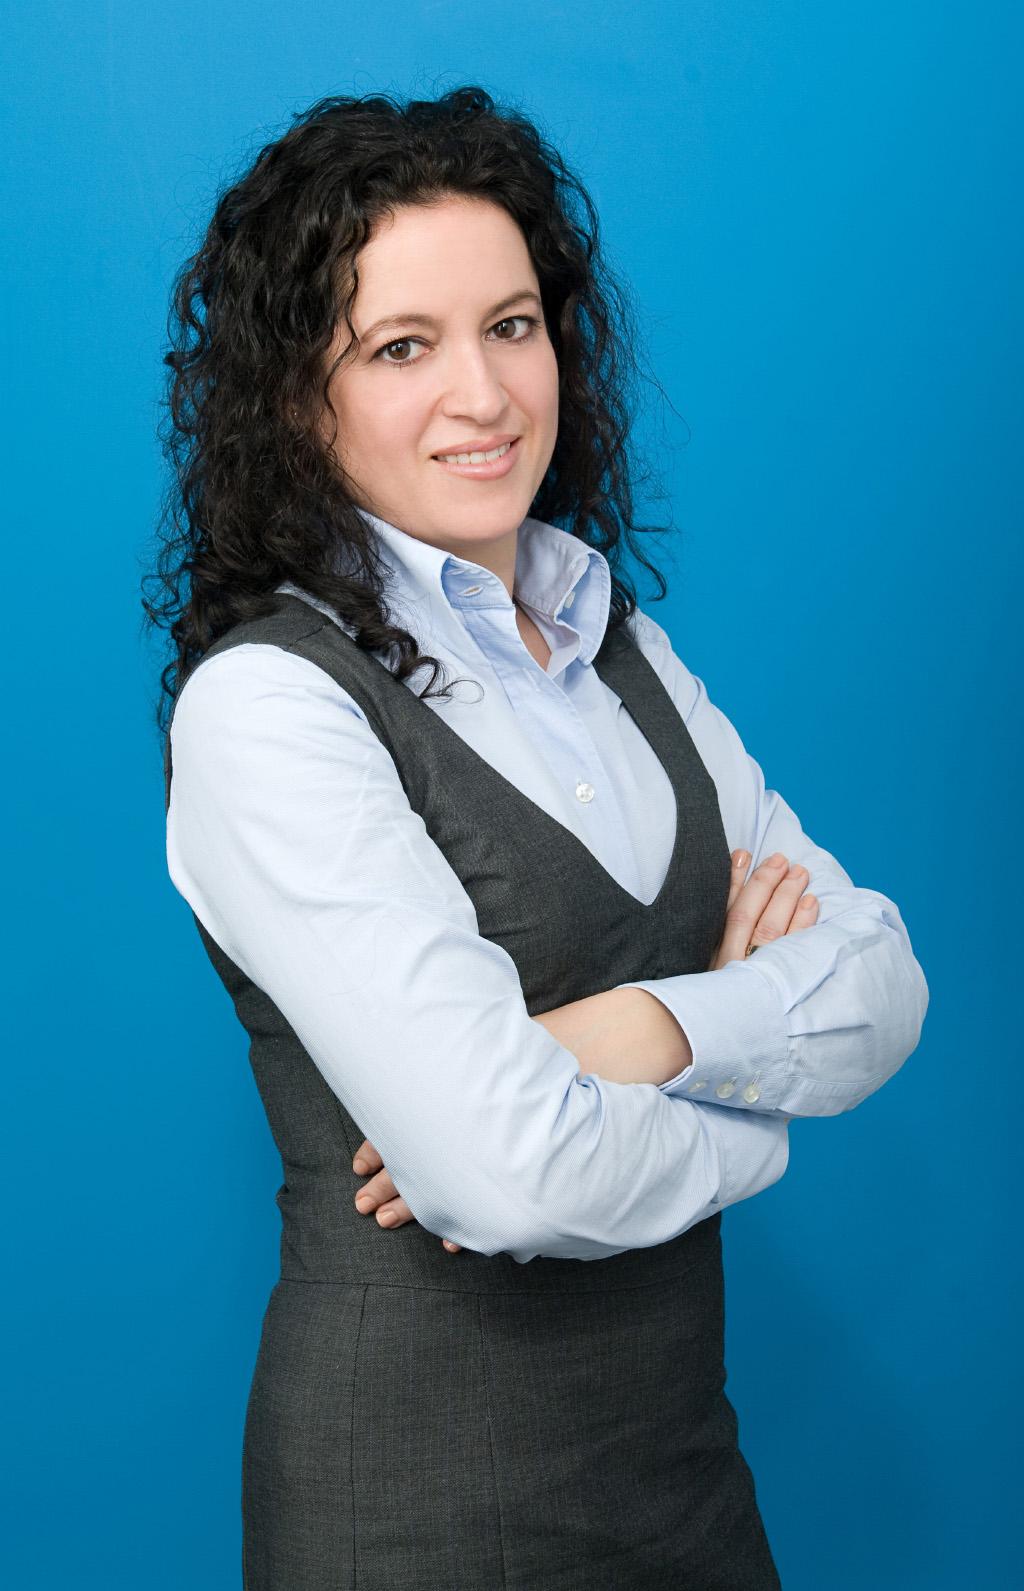 Xpat Interview: Tammy Nagy-Stellini, Managing Director, Hays Hungary